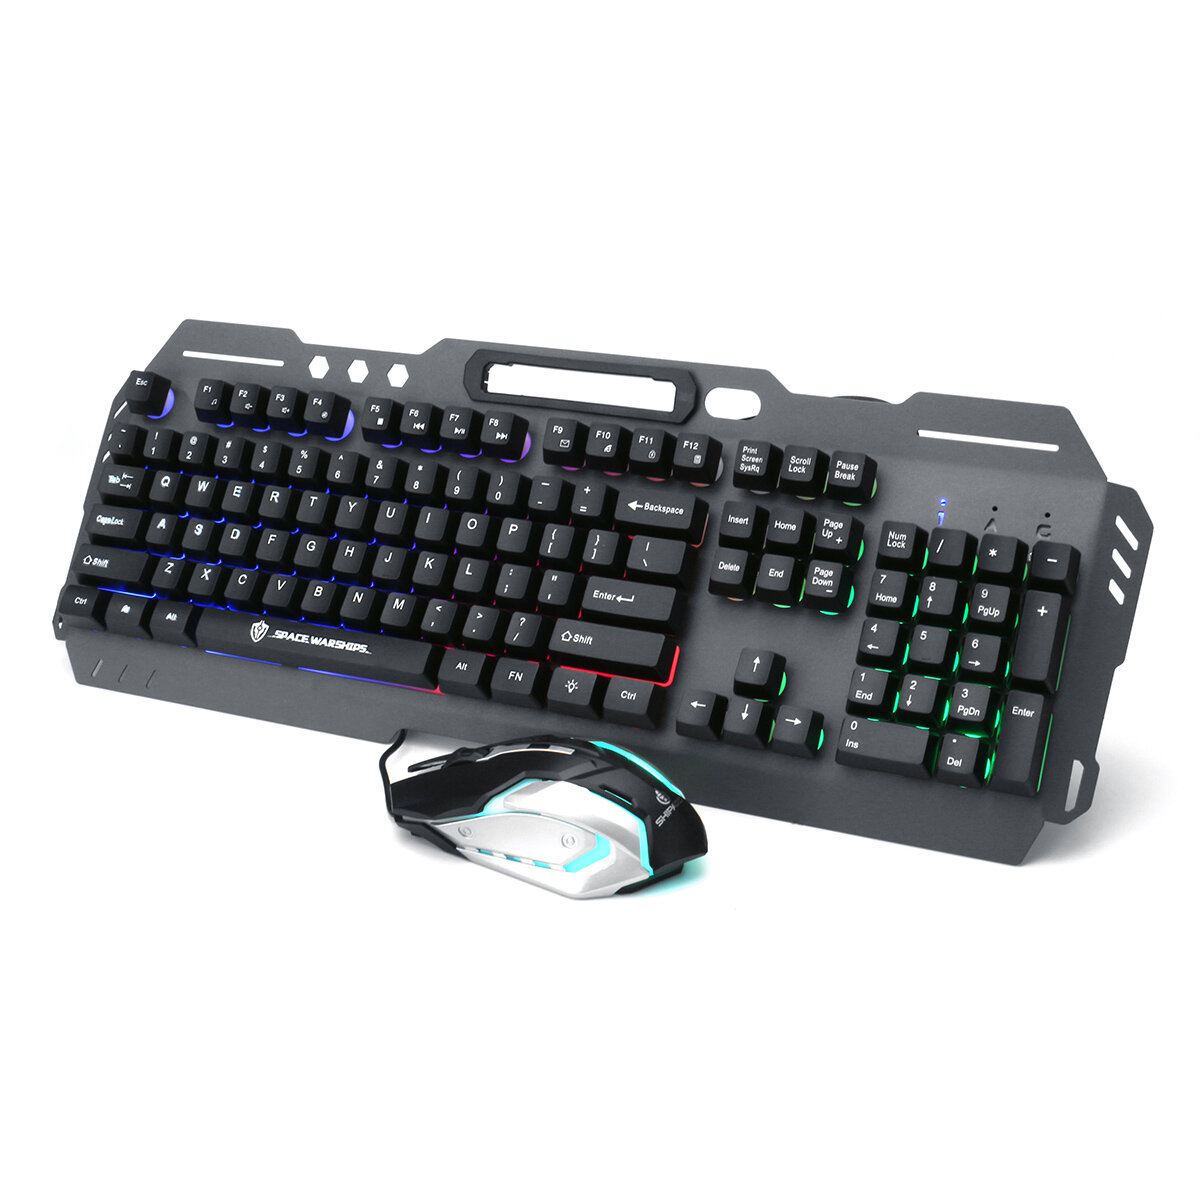 

GT700/GK70 104 Keys Keyboard USB Wired RGB Backlight Desktop Keyboard Mouse Combo Gaming for PC Laptop Gamer